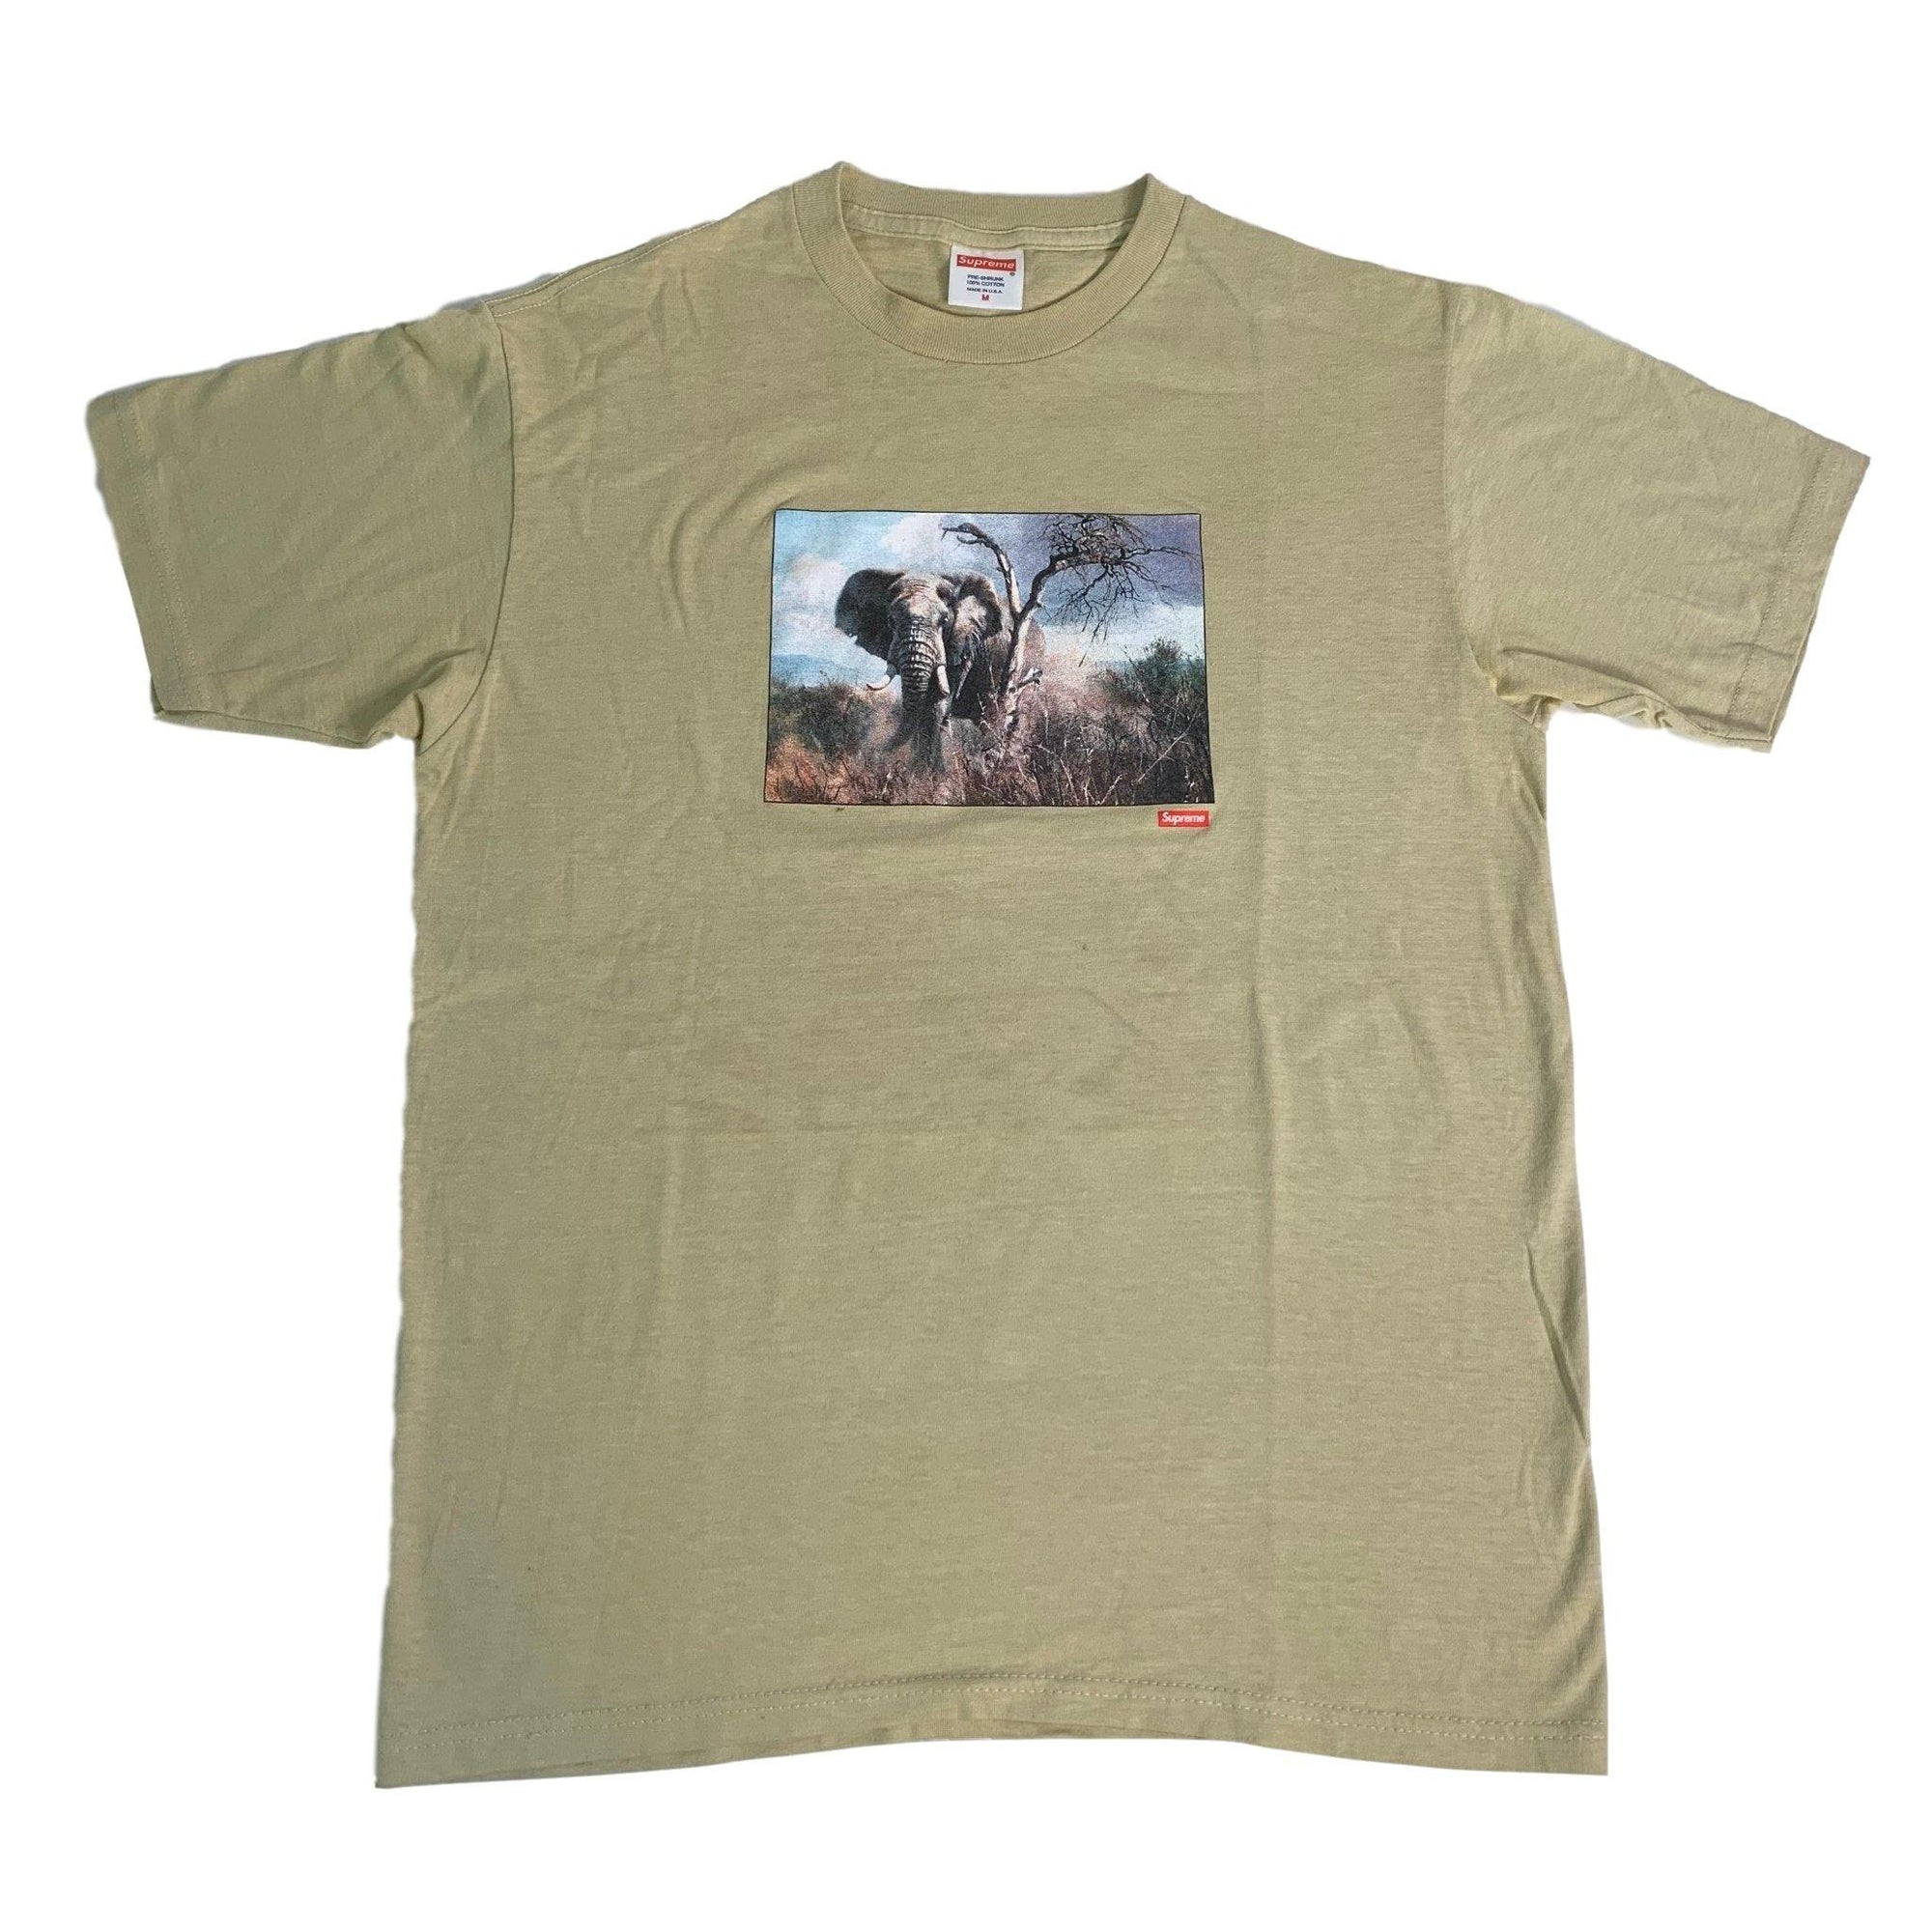 Vintage Supreme "Safari" T-Shirt - jointcustodydc